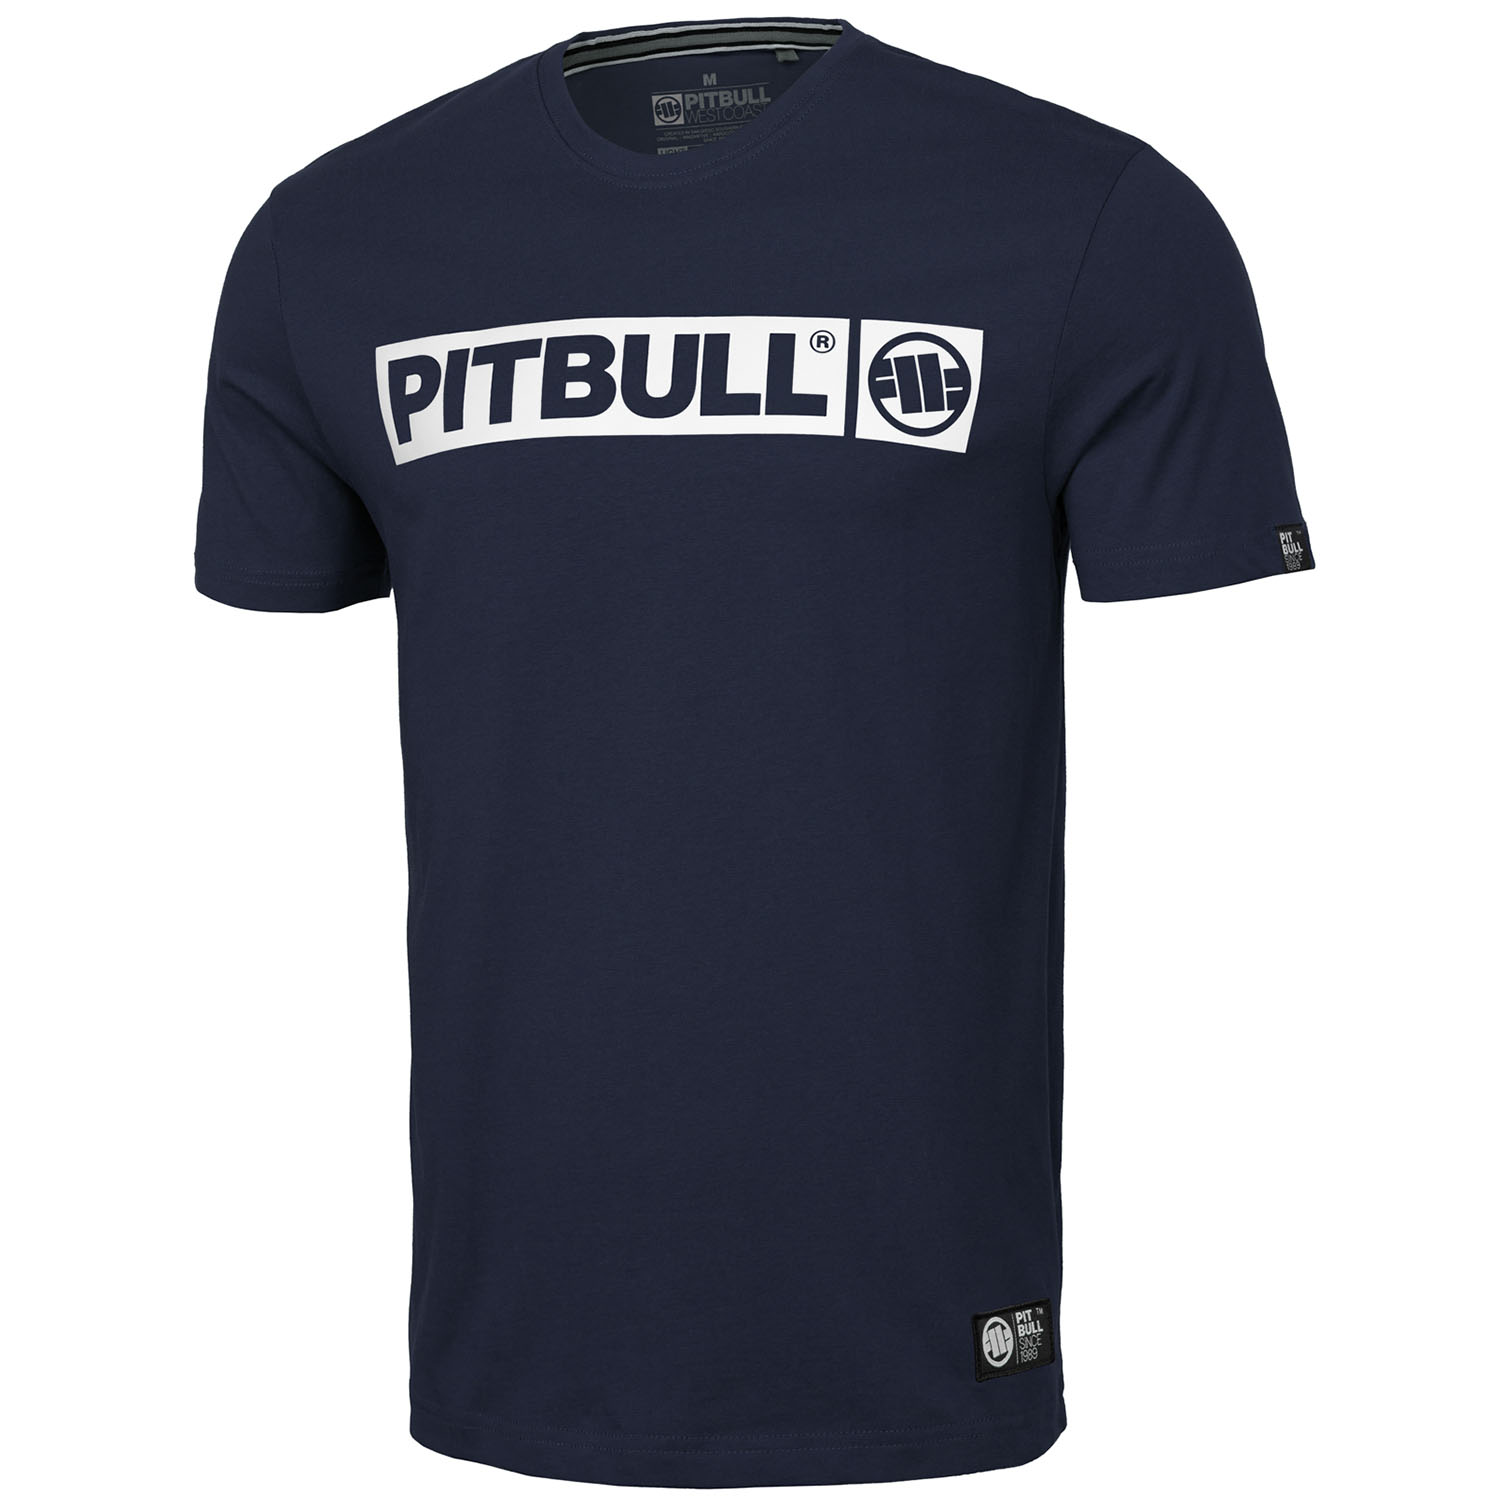 Pit Bull West Coast T-Shirt, Hilltop S70, navy